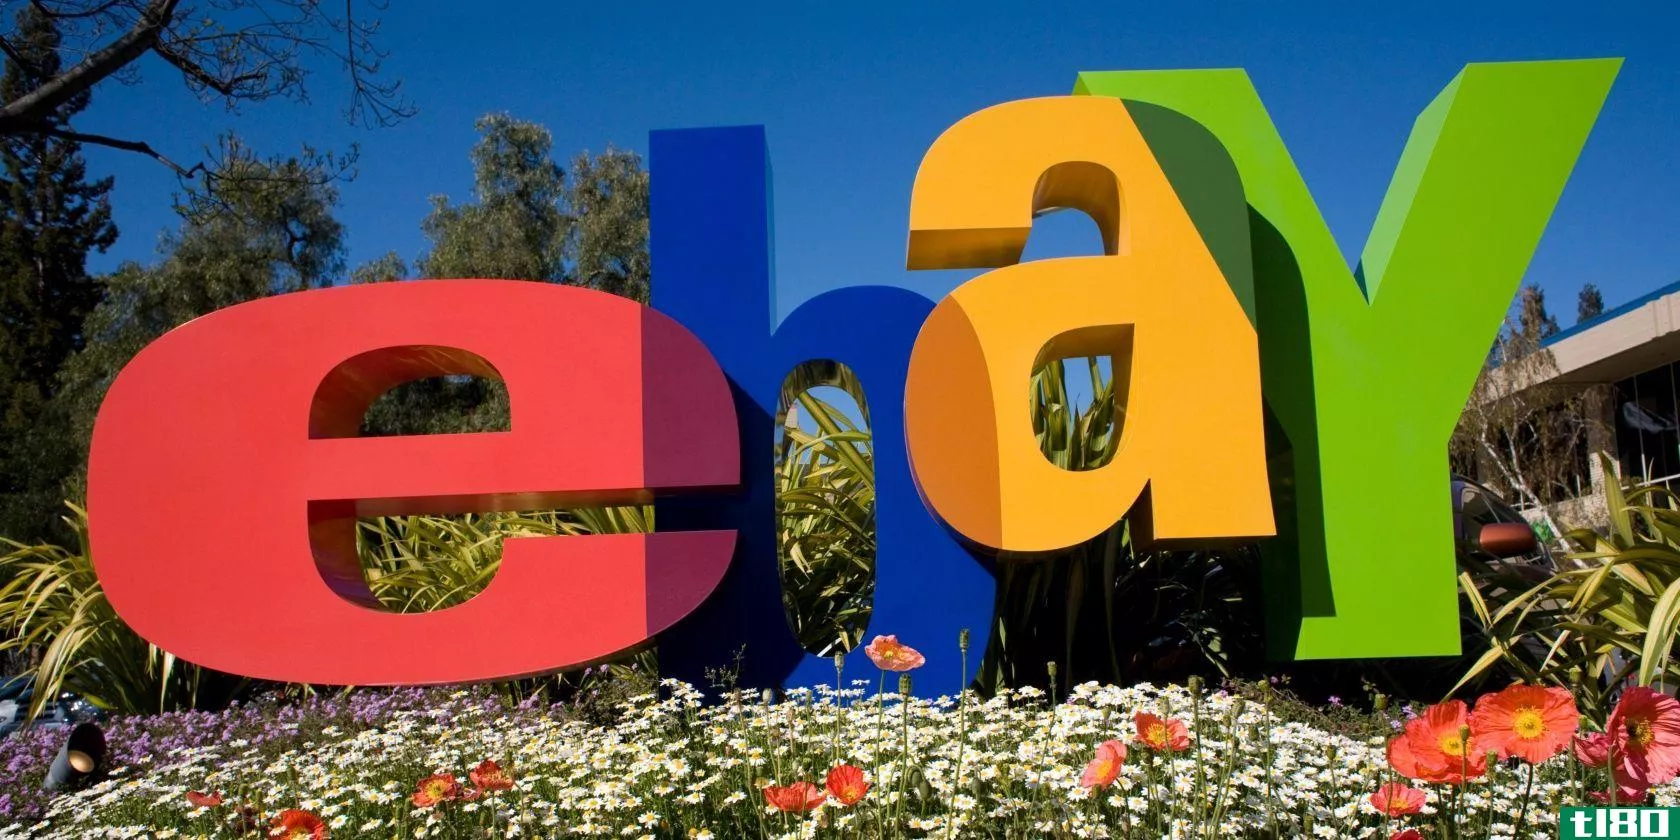 ebay-logo-colorful-flowers